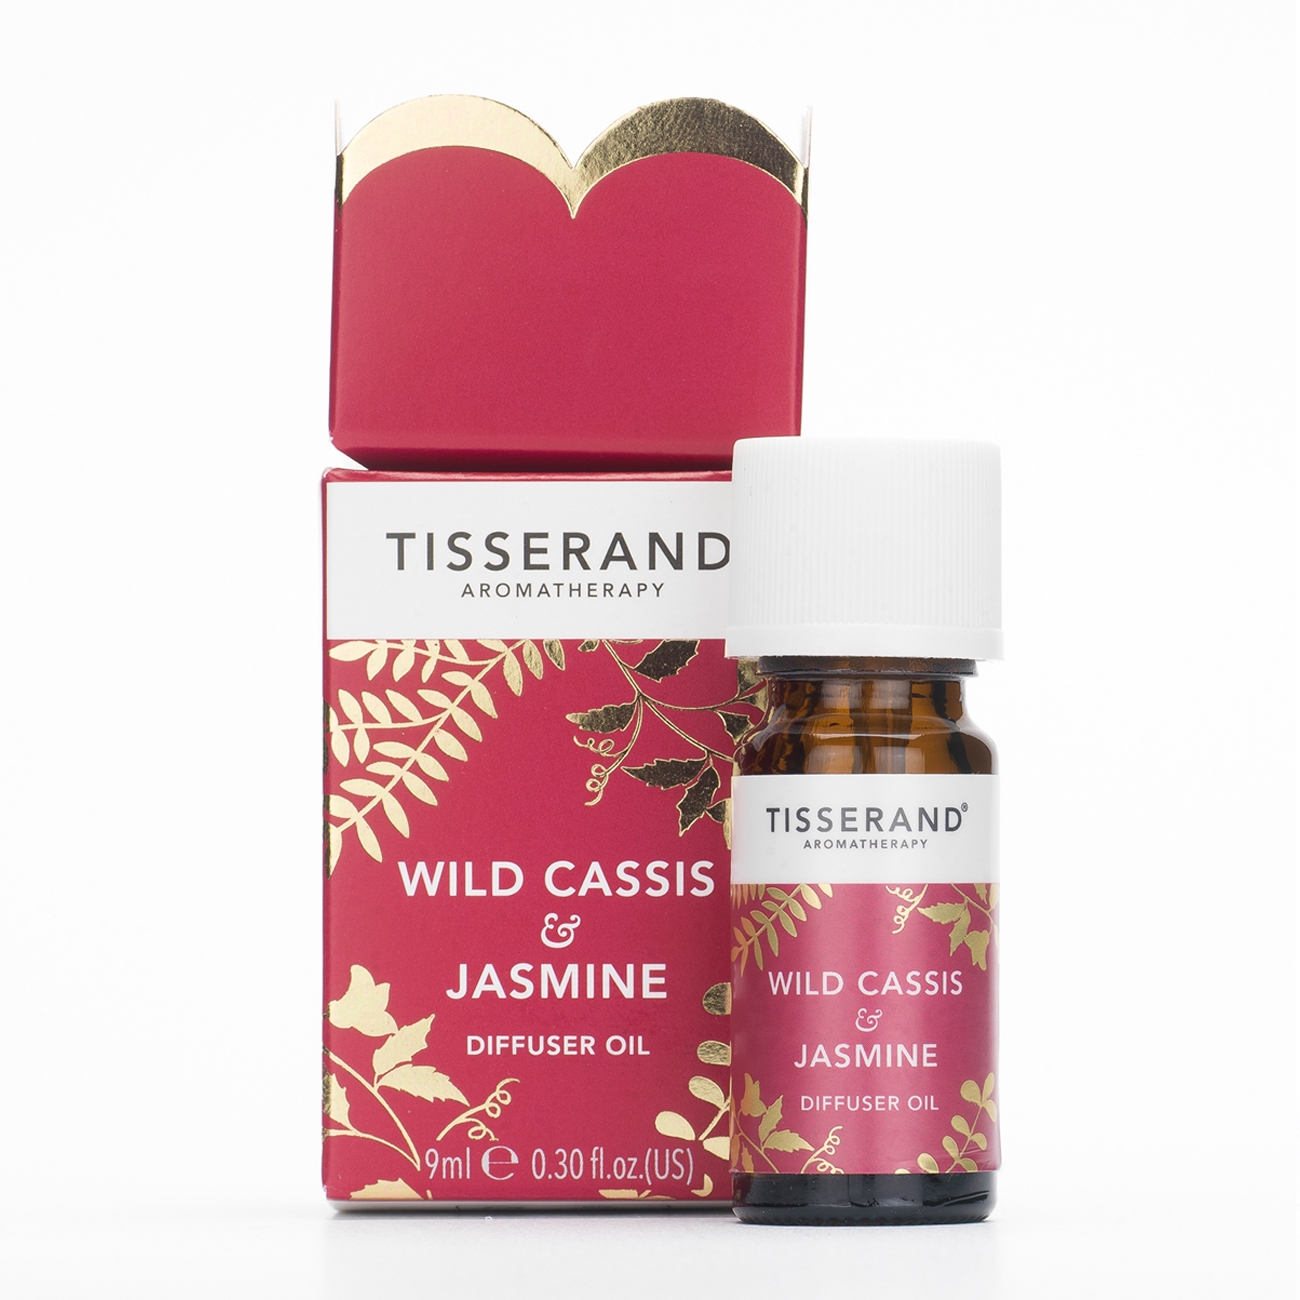 Tisserand Aromatherapy Wild Cassis & Jasmine Diffuser Oil 9ml